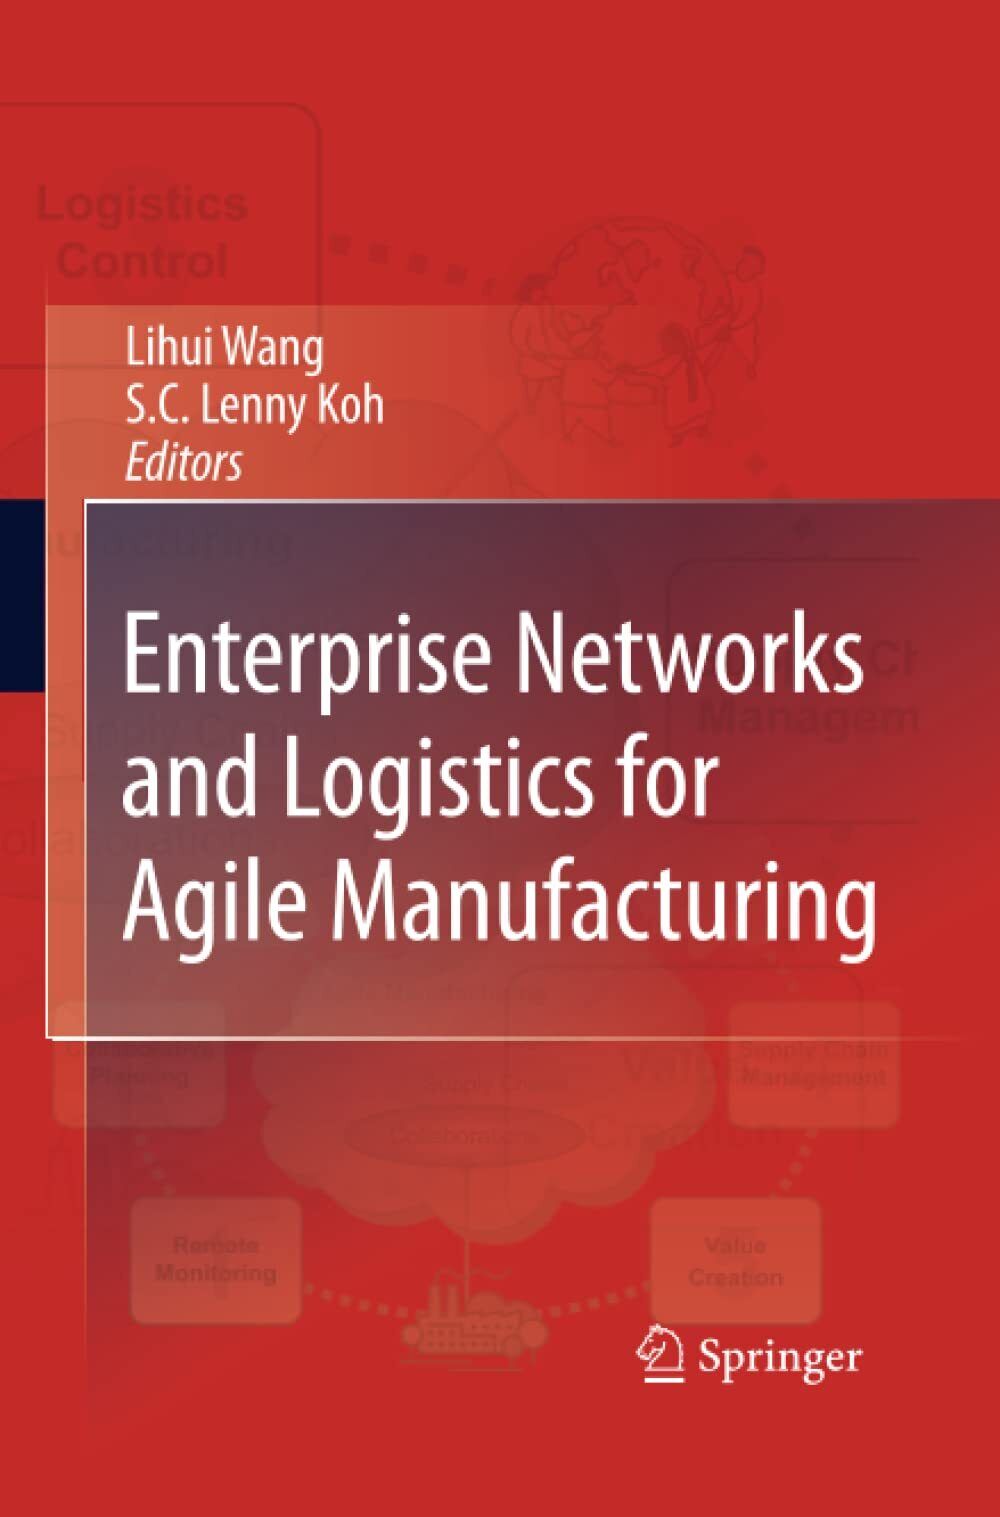 Enterprise Networks and Logistics for Agile Manufacturing - Springer, 2014